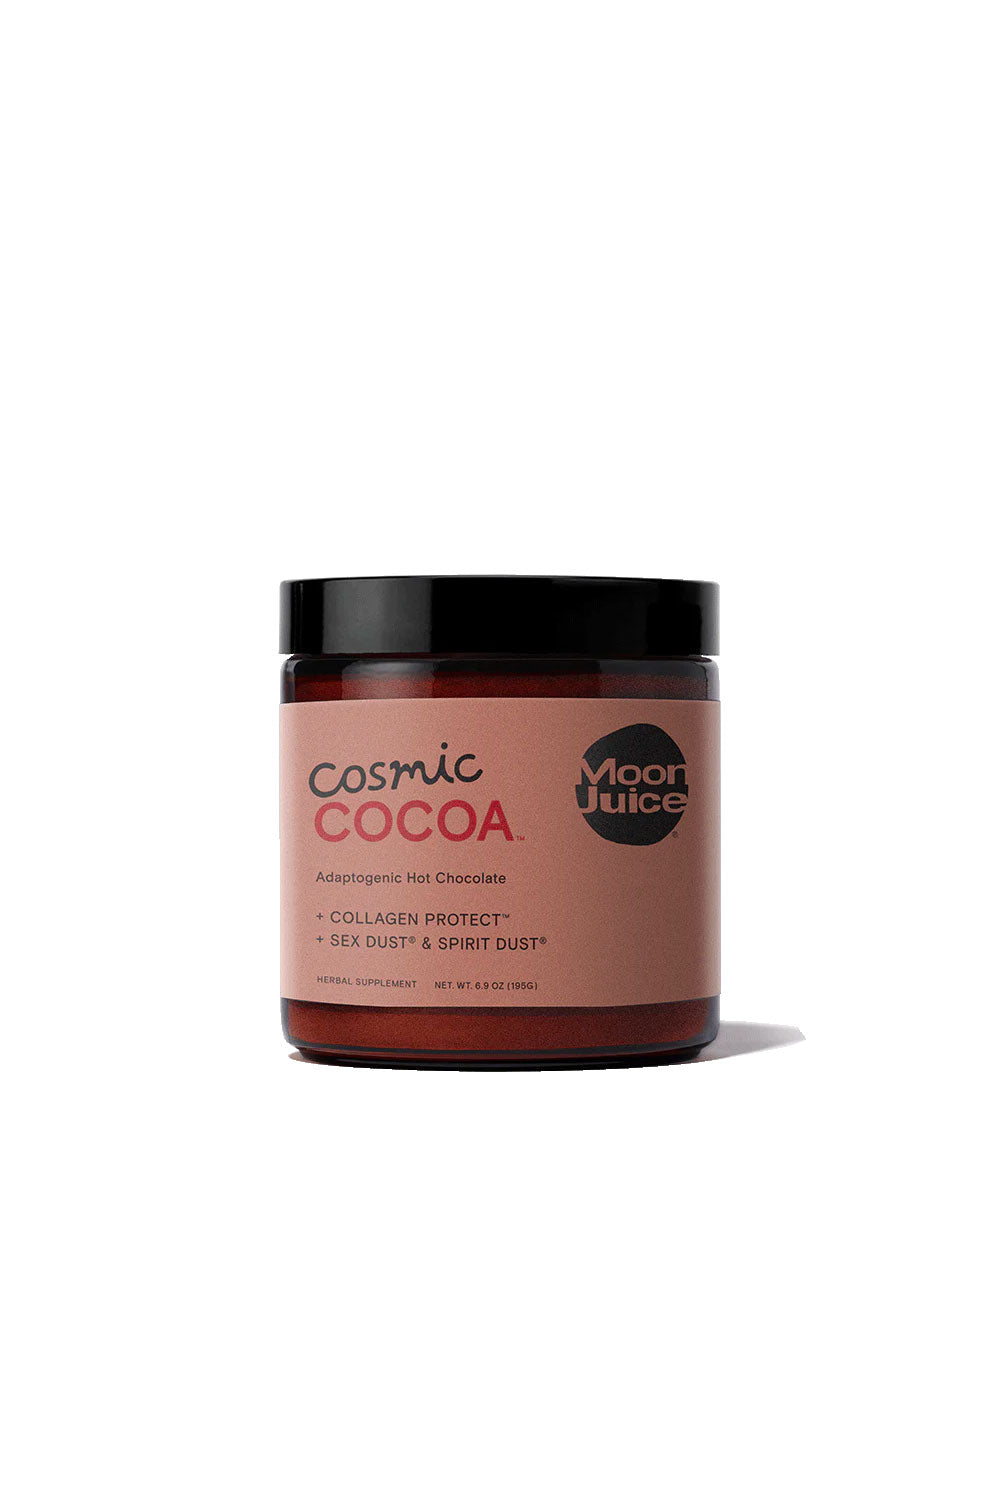 Cosmic Cocoa by Moon Juice